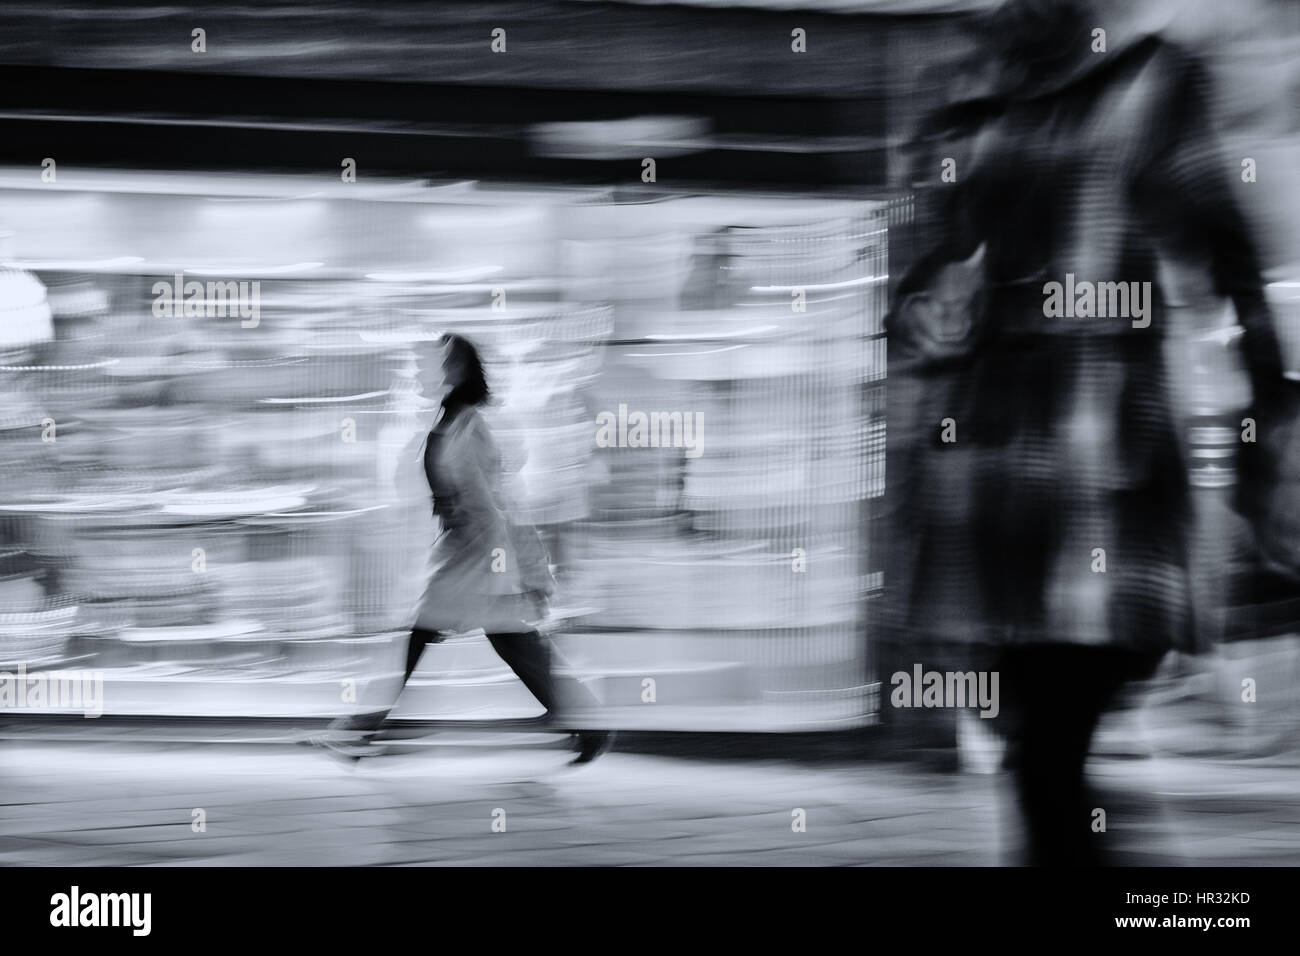 Einkaufen in Venedig, Italien - digital verändert Stockfoto